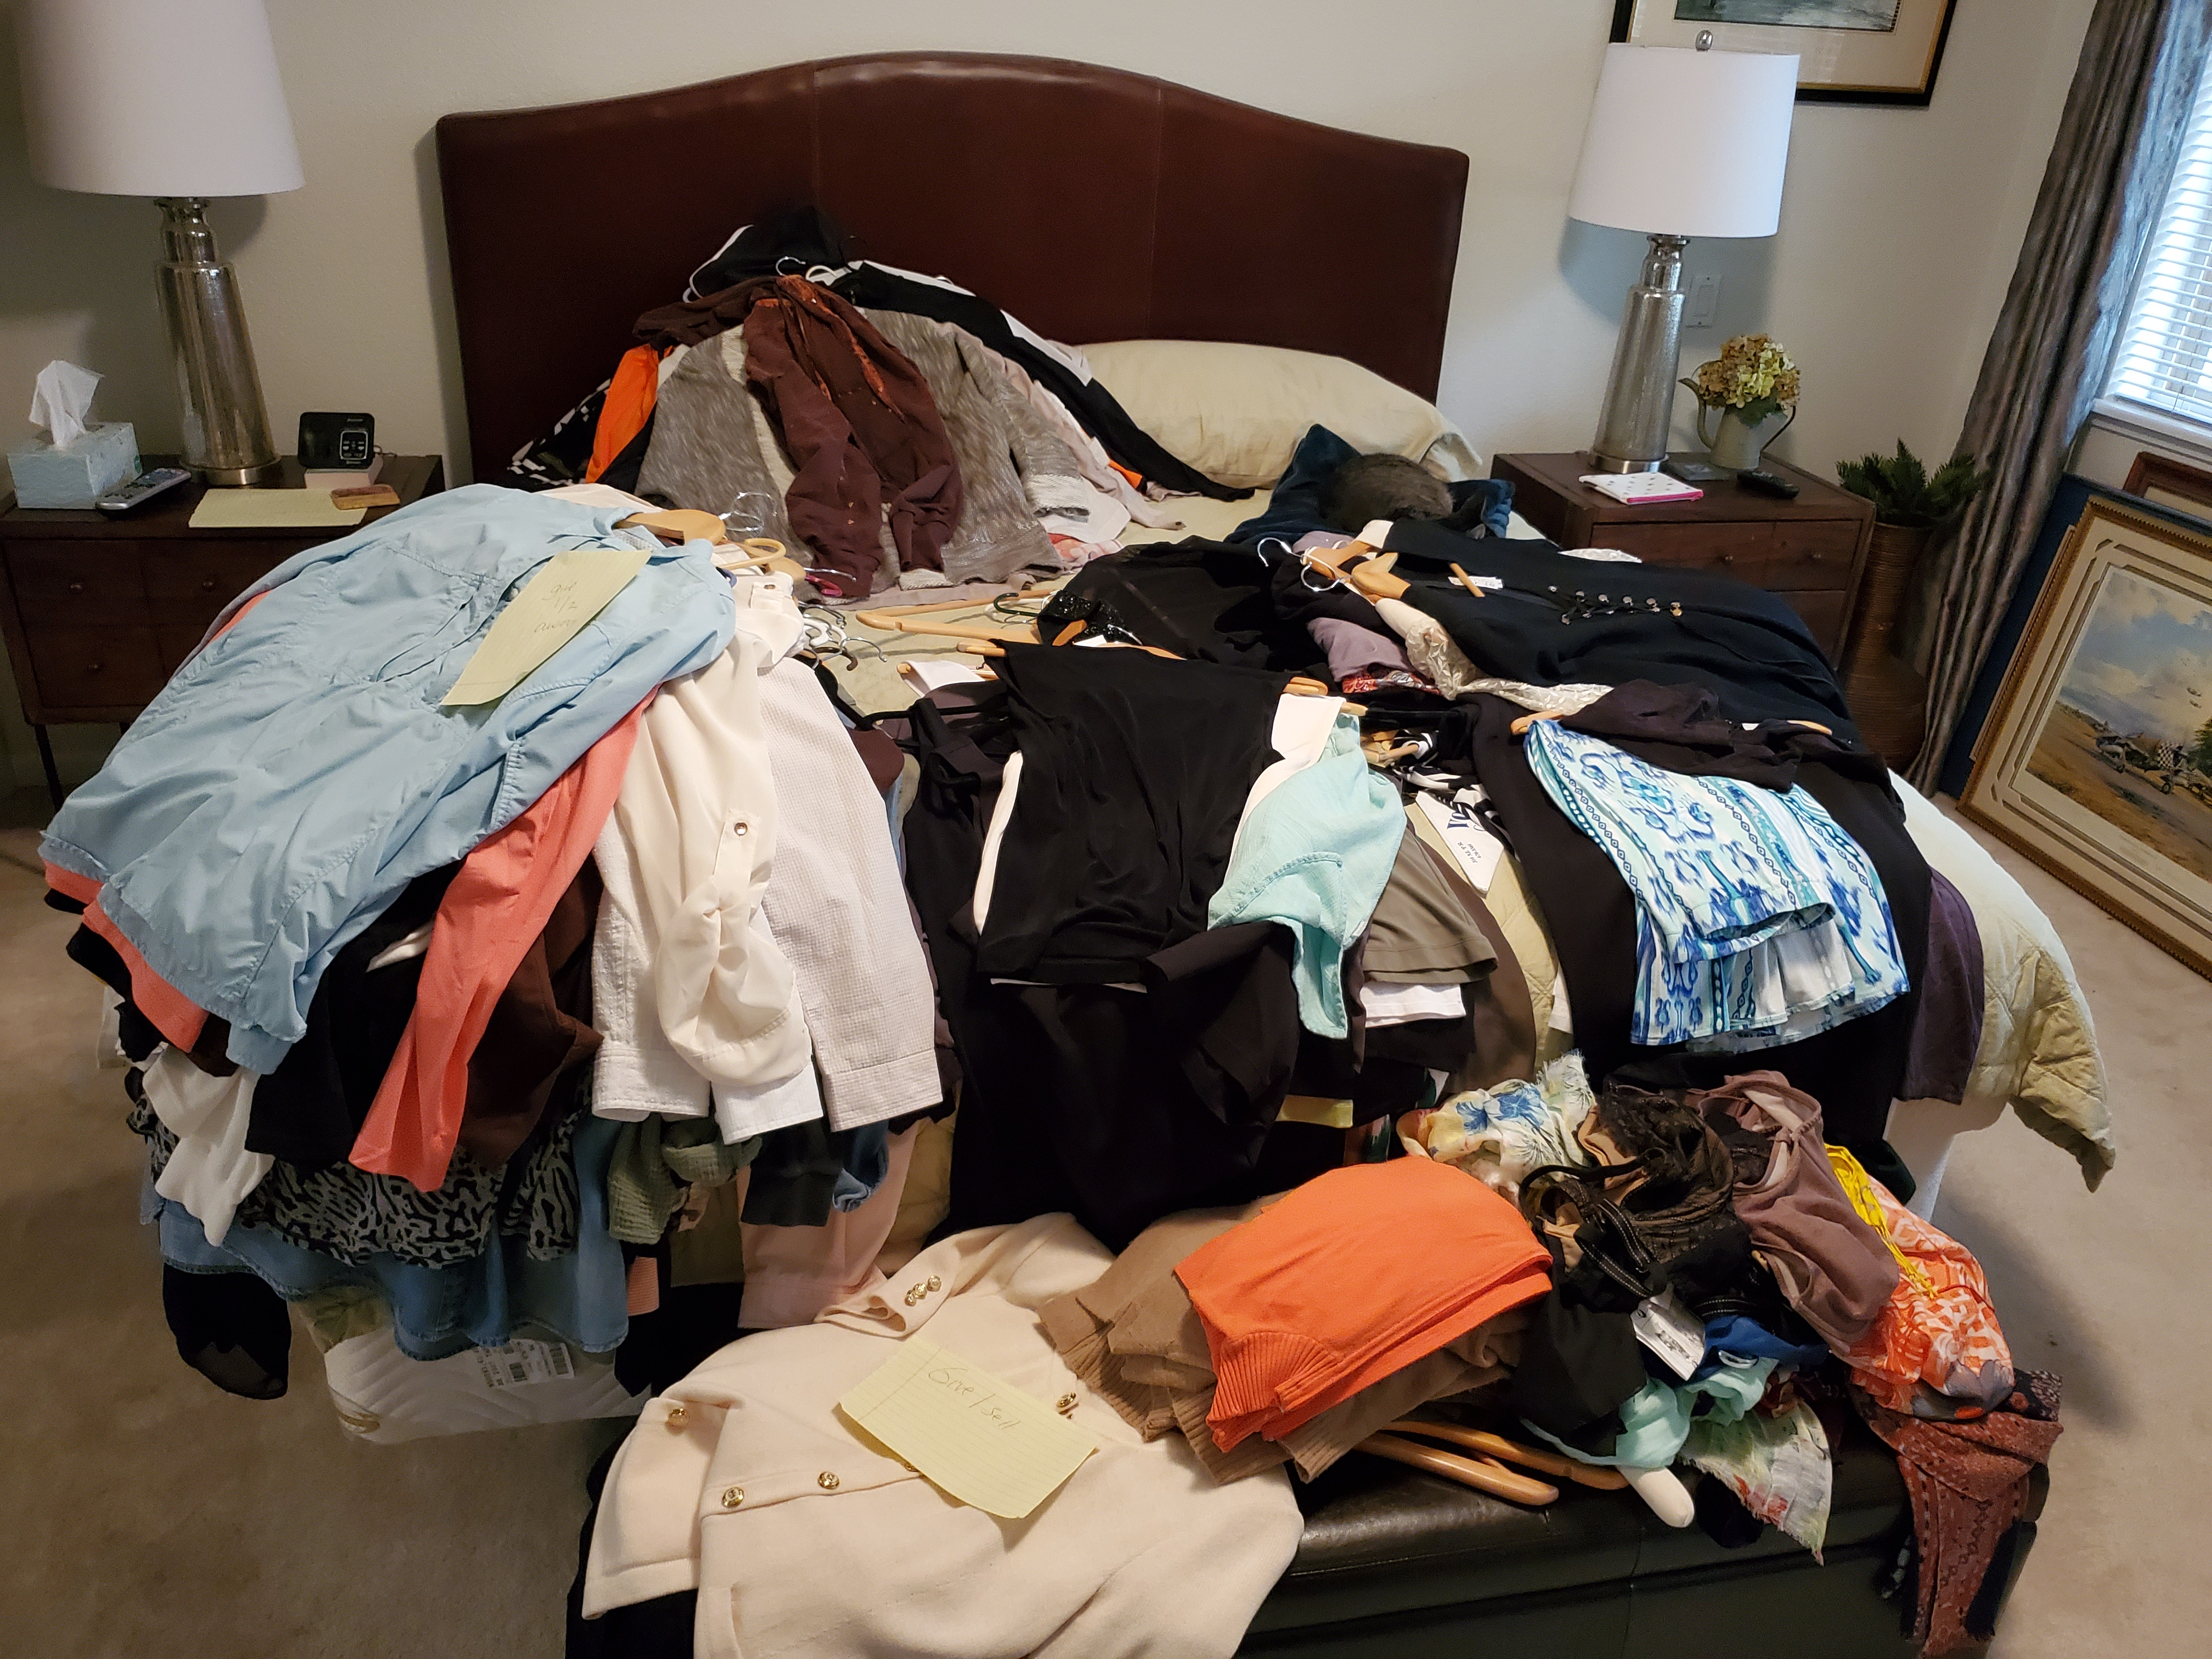 Piles of clothes during closet organization